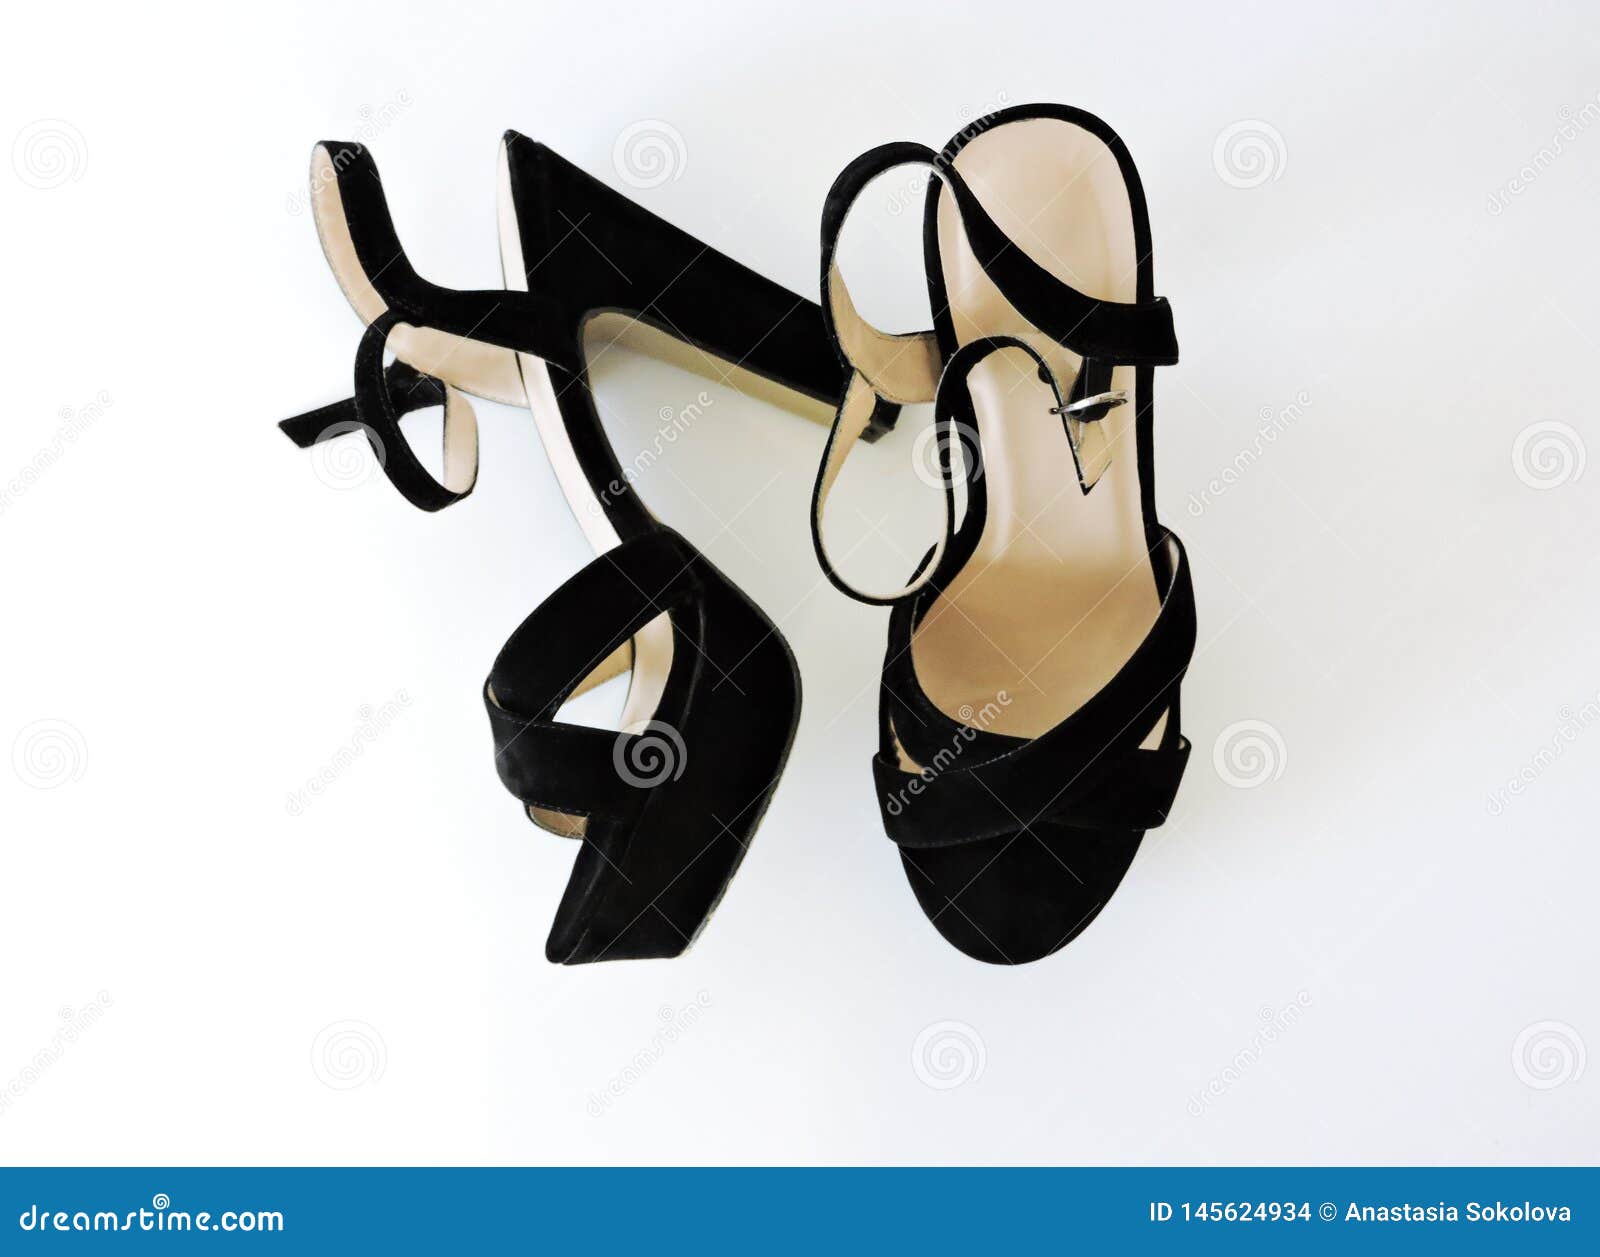 black expensive heels